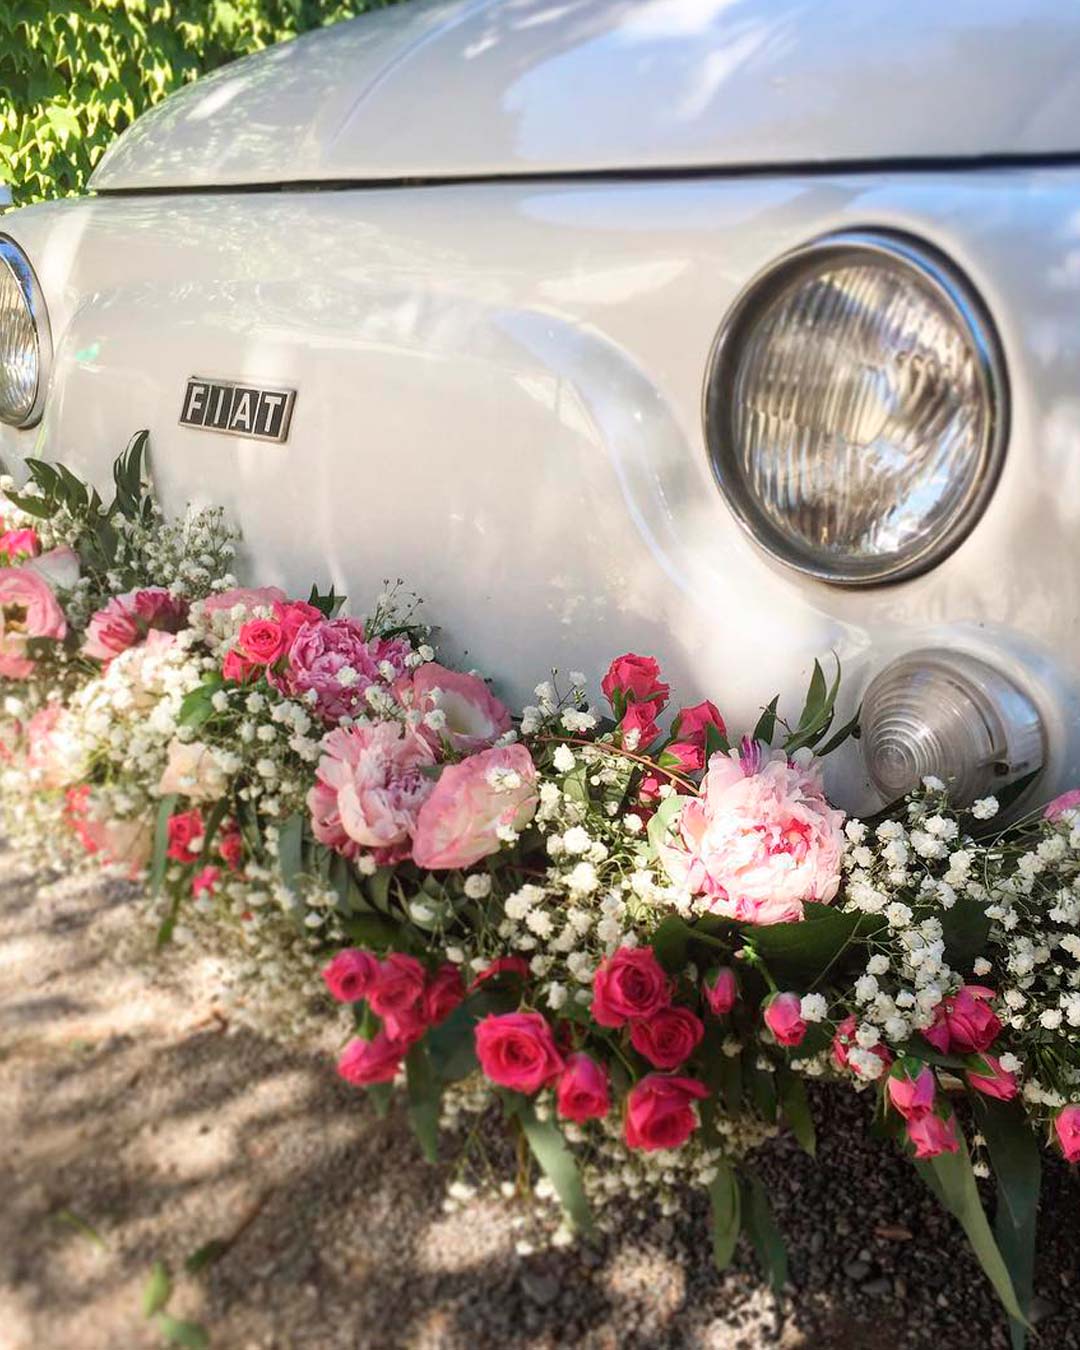 wedding car decor ideas pink flowers roses